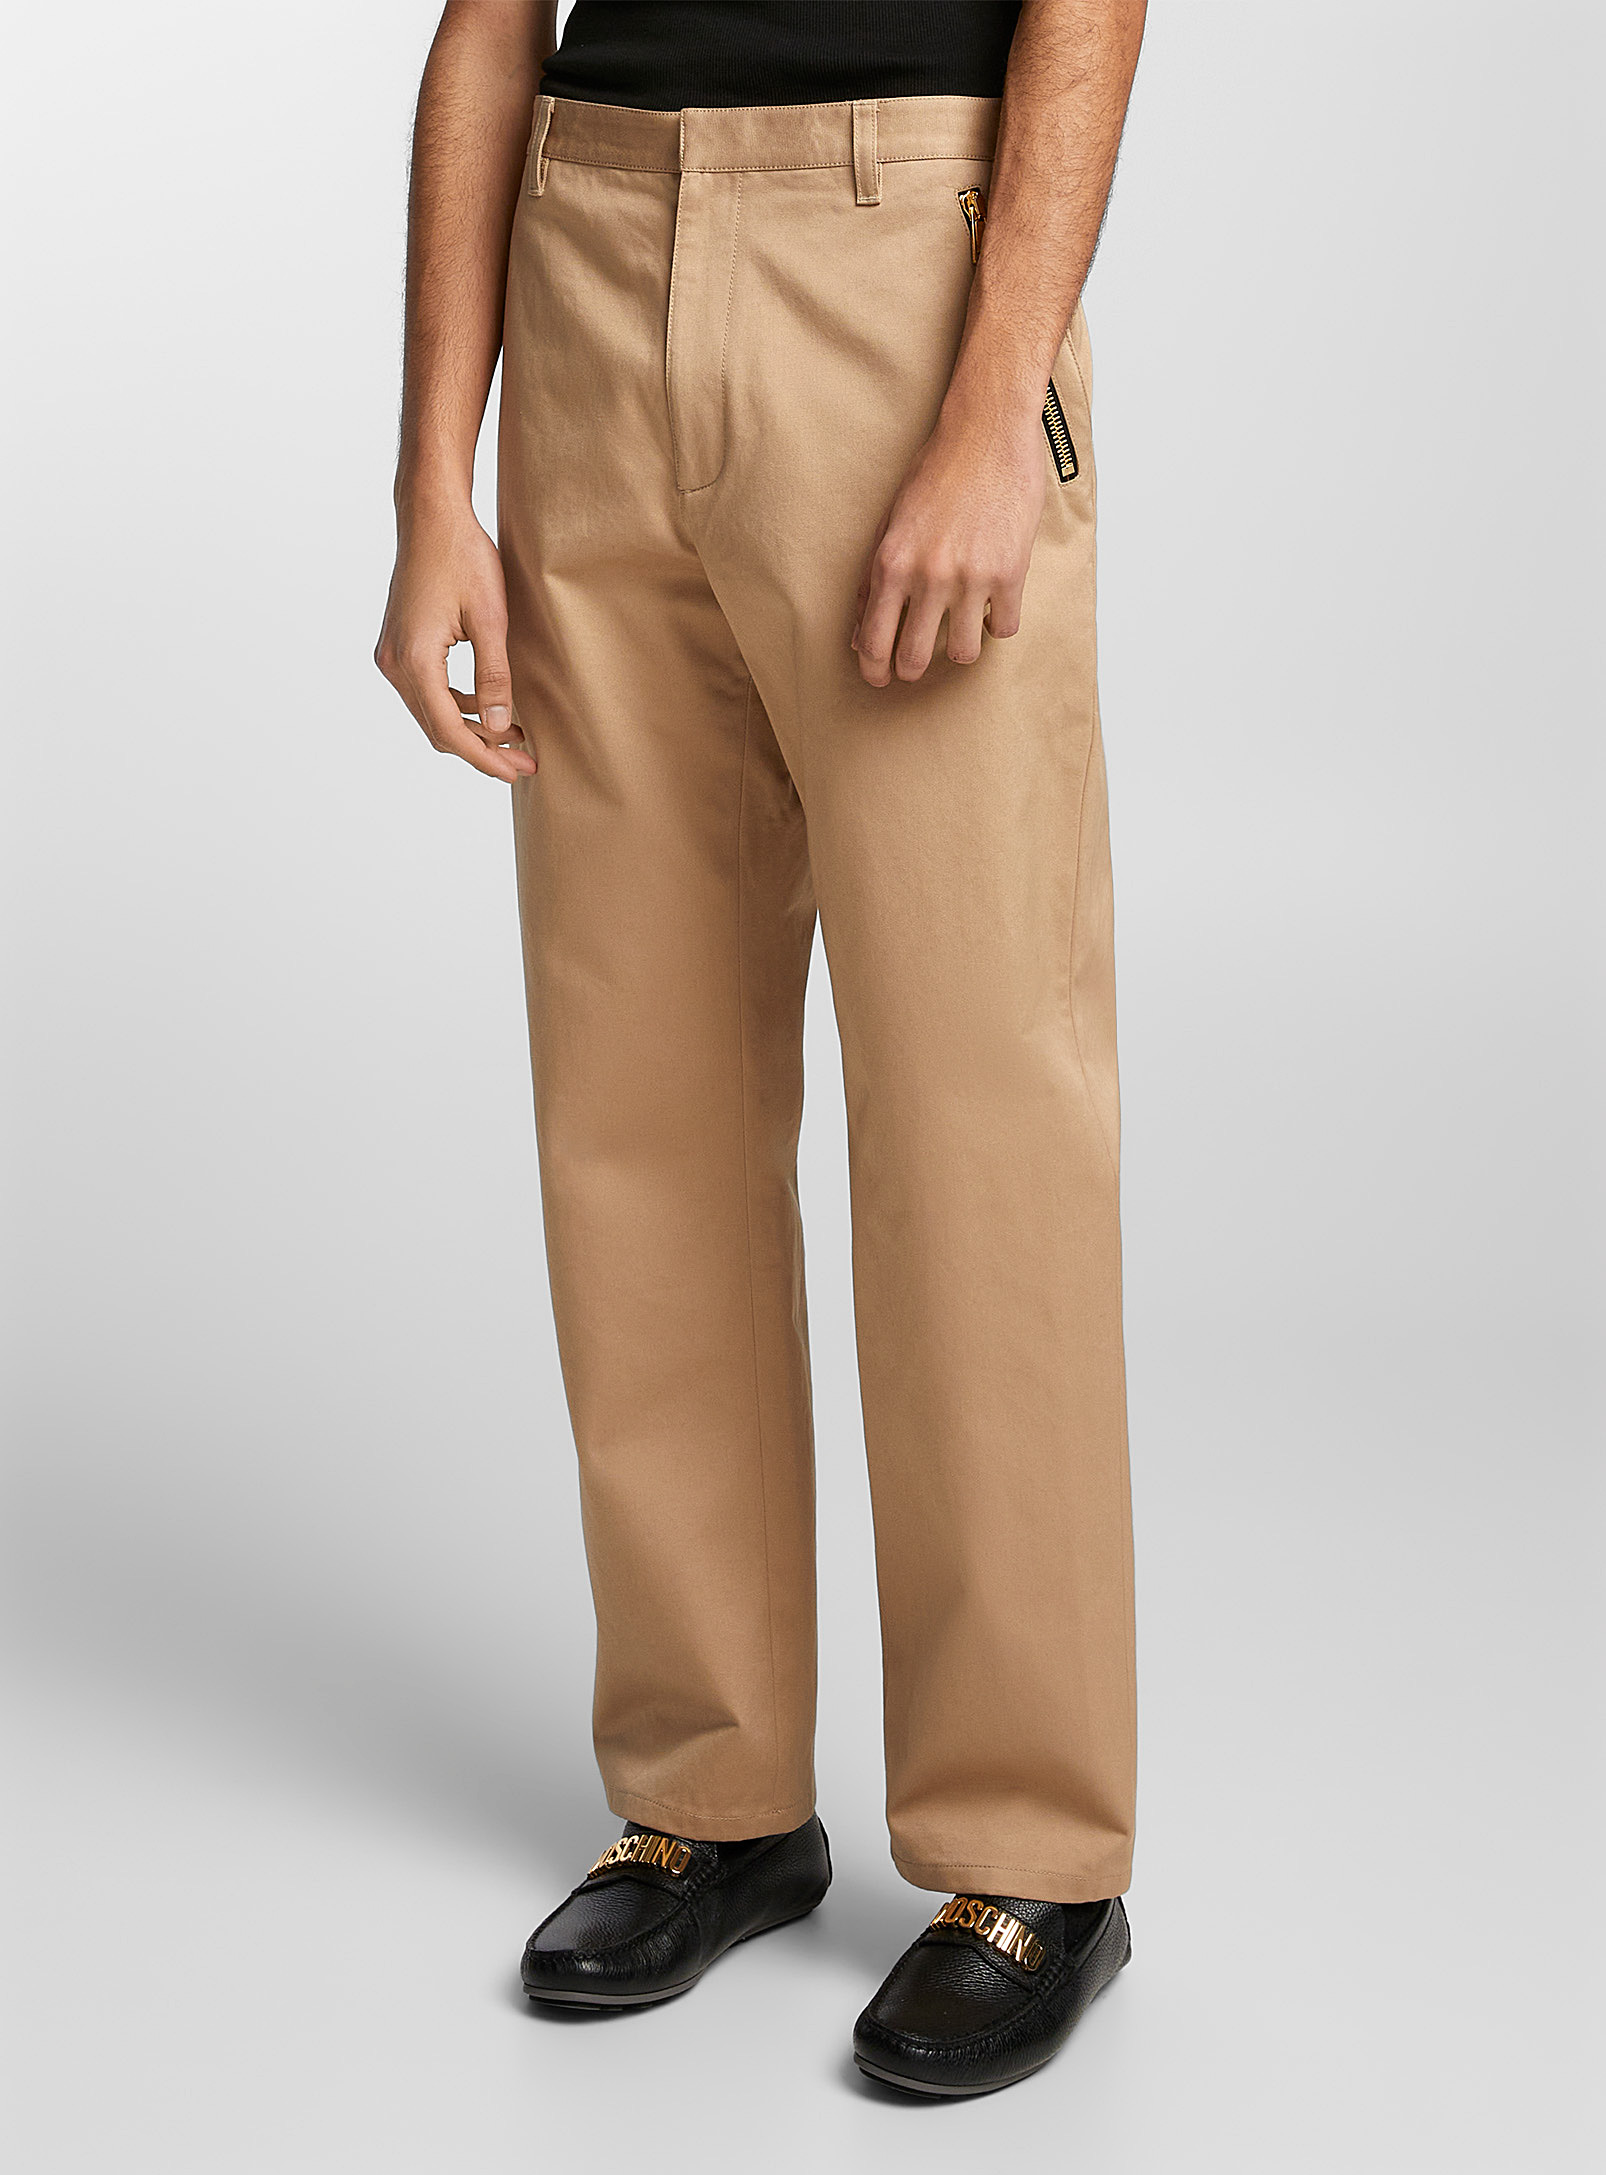 Moschino - Le pantalon chino beige